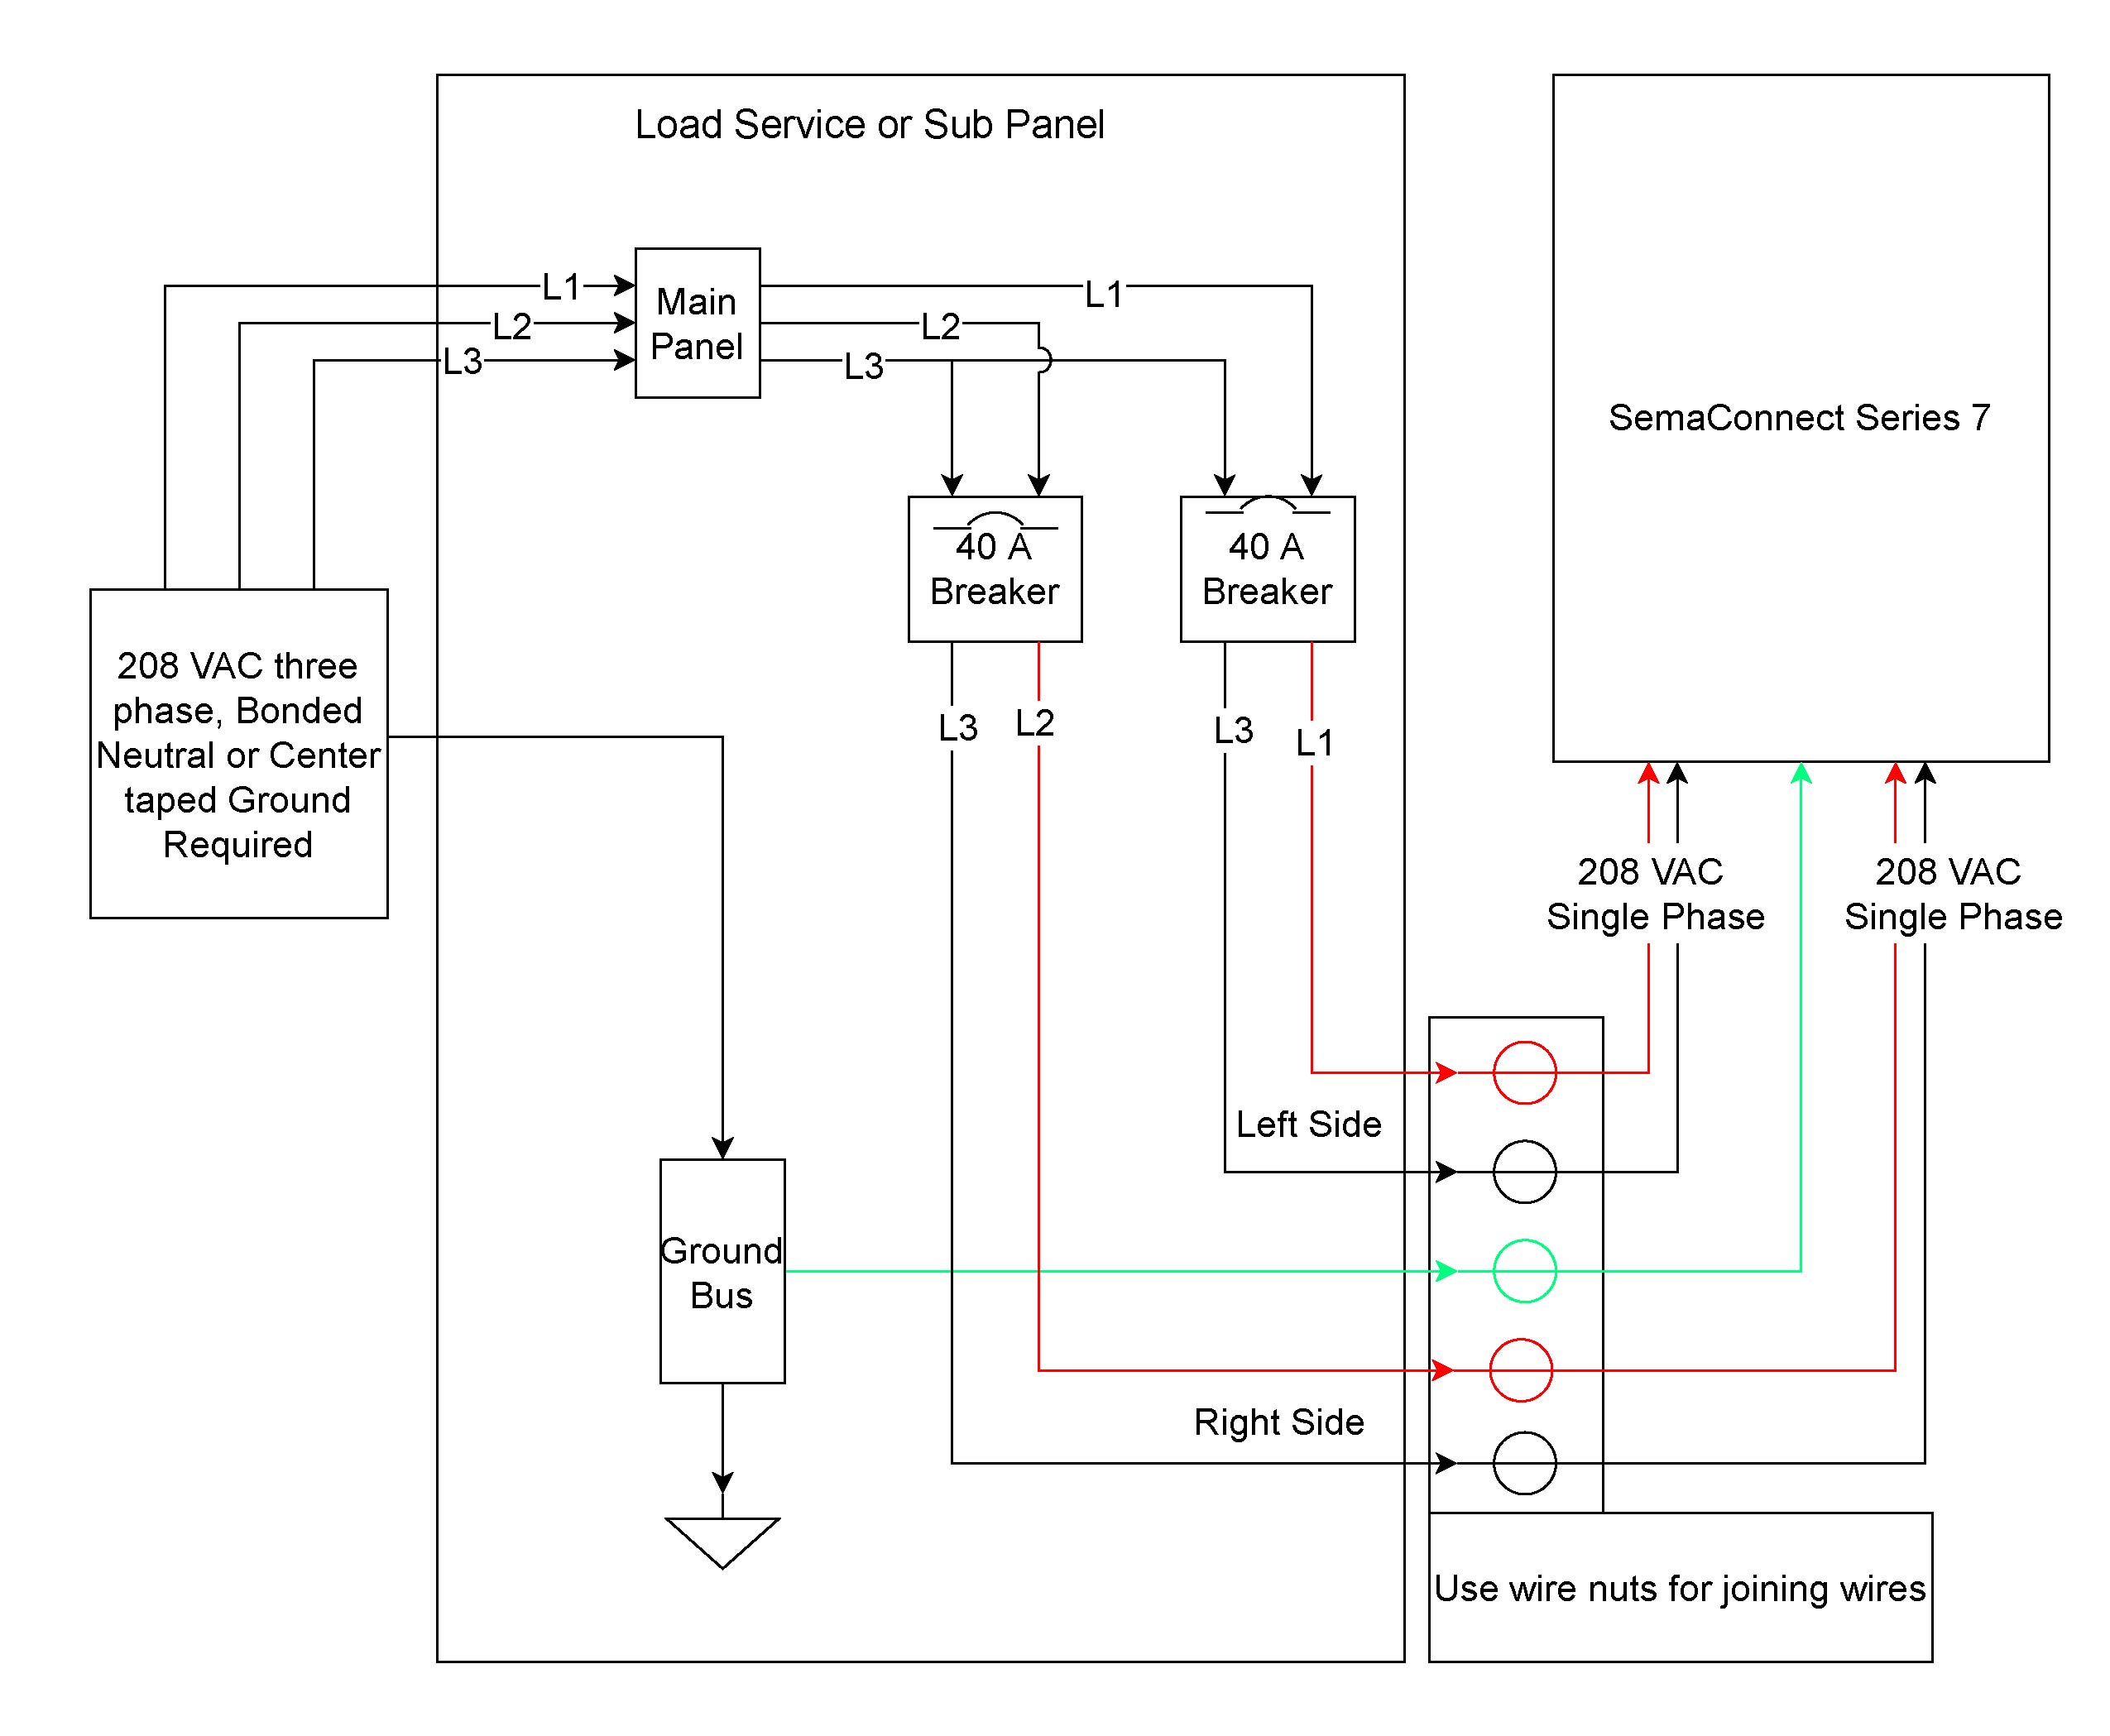 swamp cooler motor wiring diagram